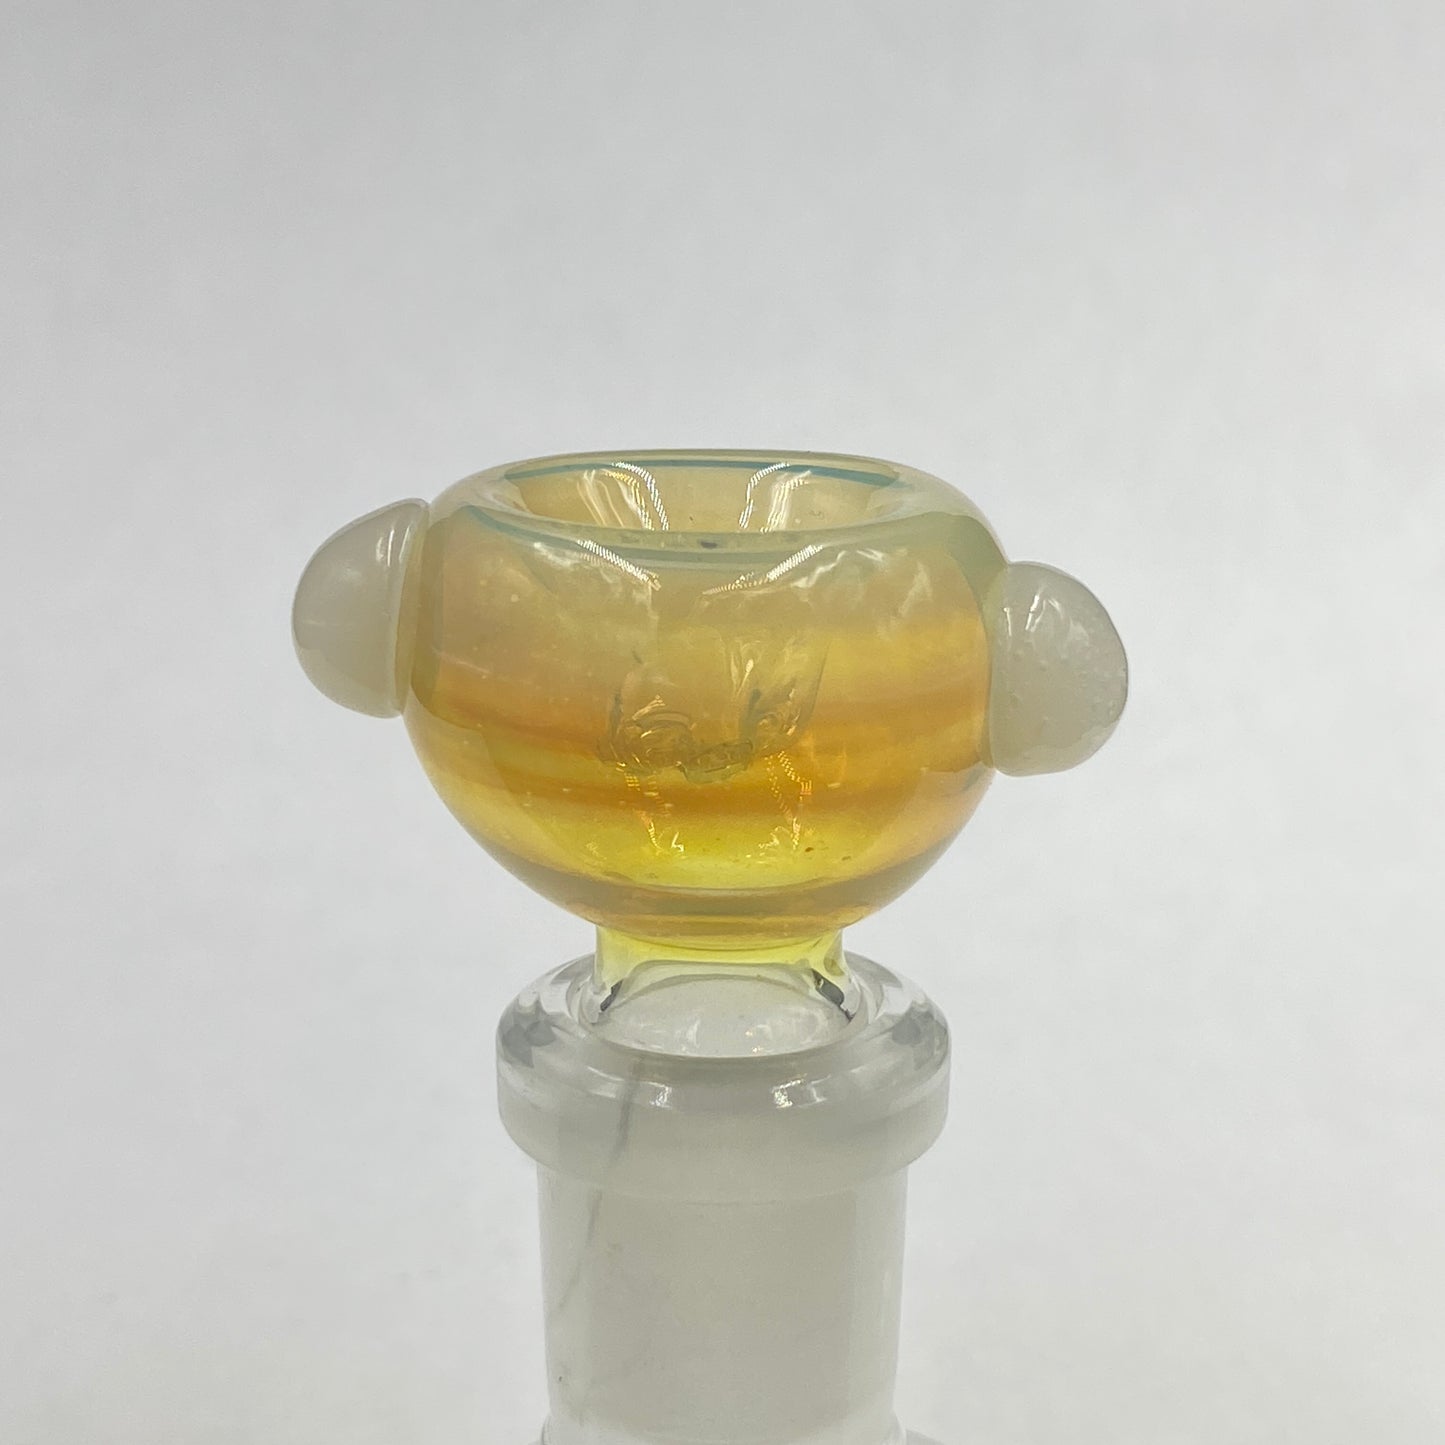 Kitchen Glass Designs - 14mm 4-Hole Slide